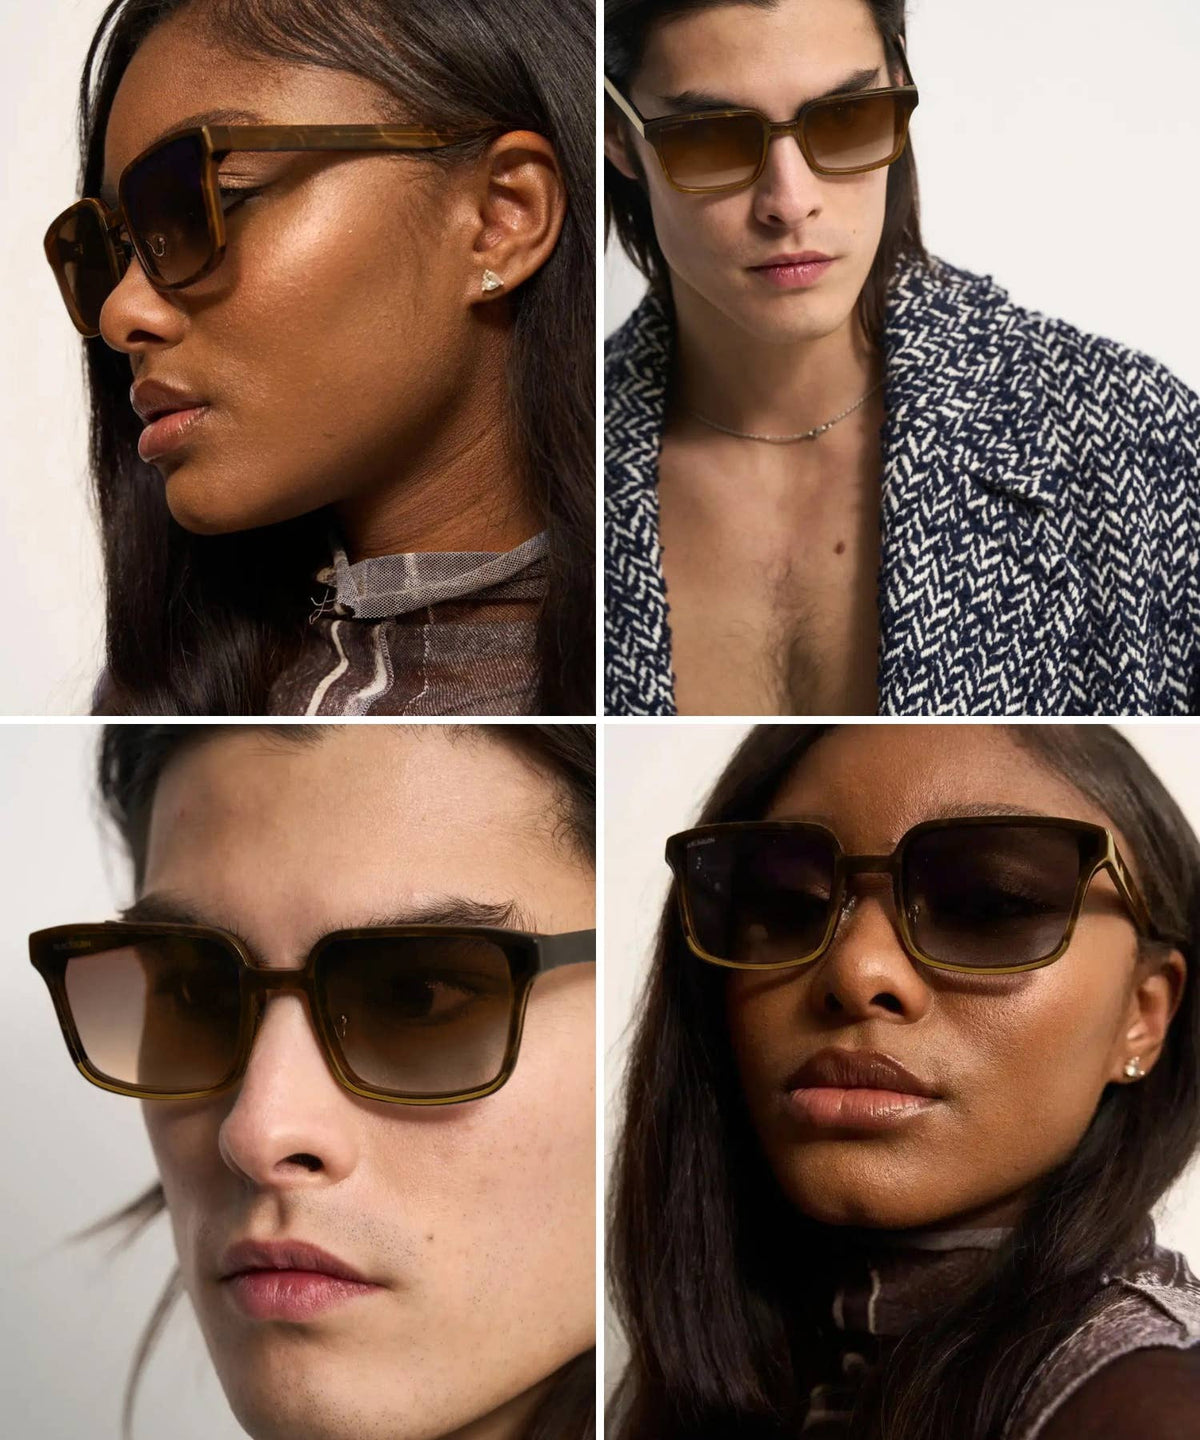 Nova Sunglasses | Maple Dew